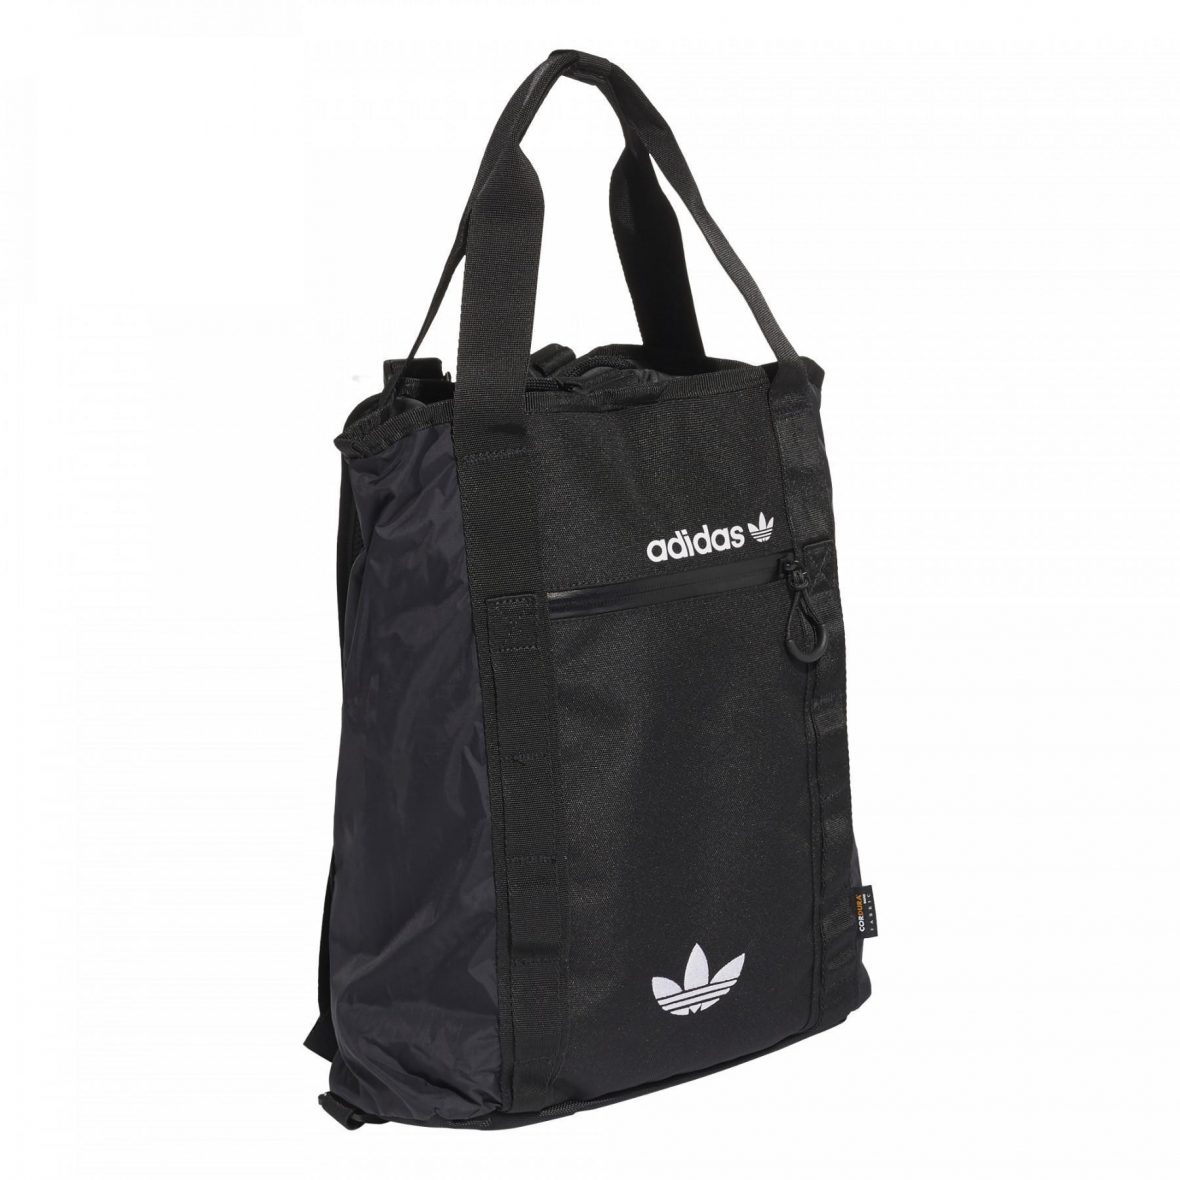 Adidas Unisex Adventure Cordura Convertible Cinch Backpack/tote Bag Black/white GN2188